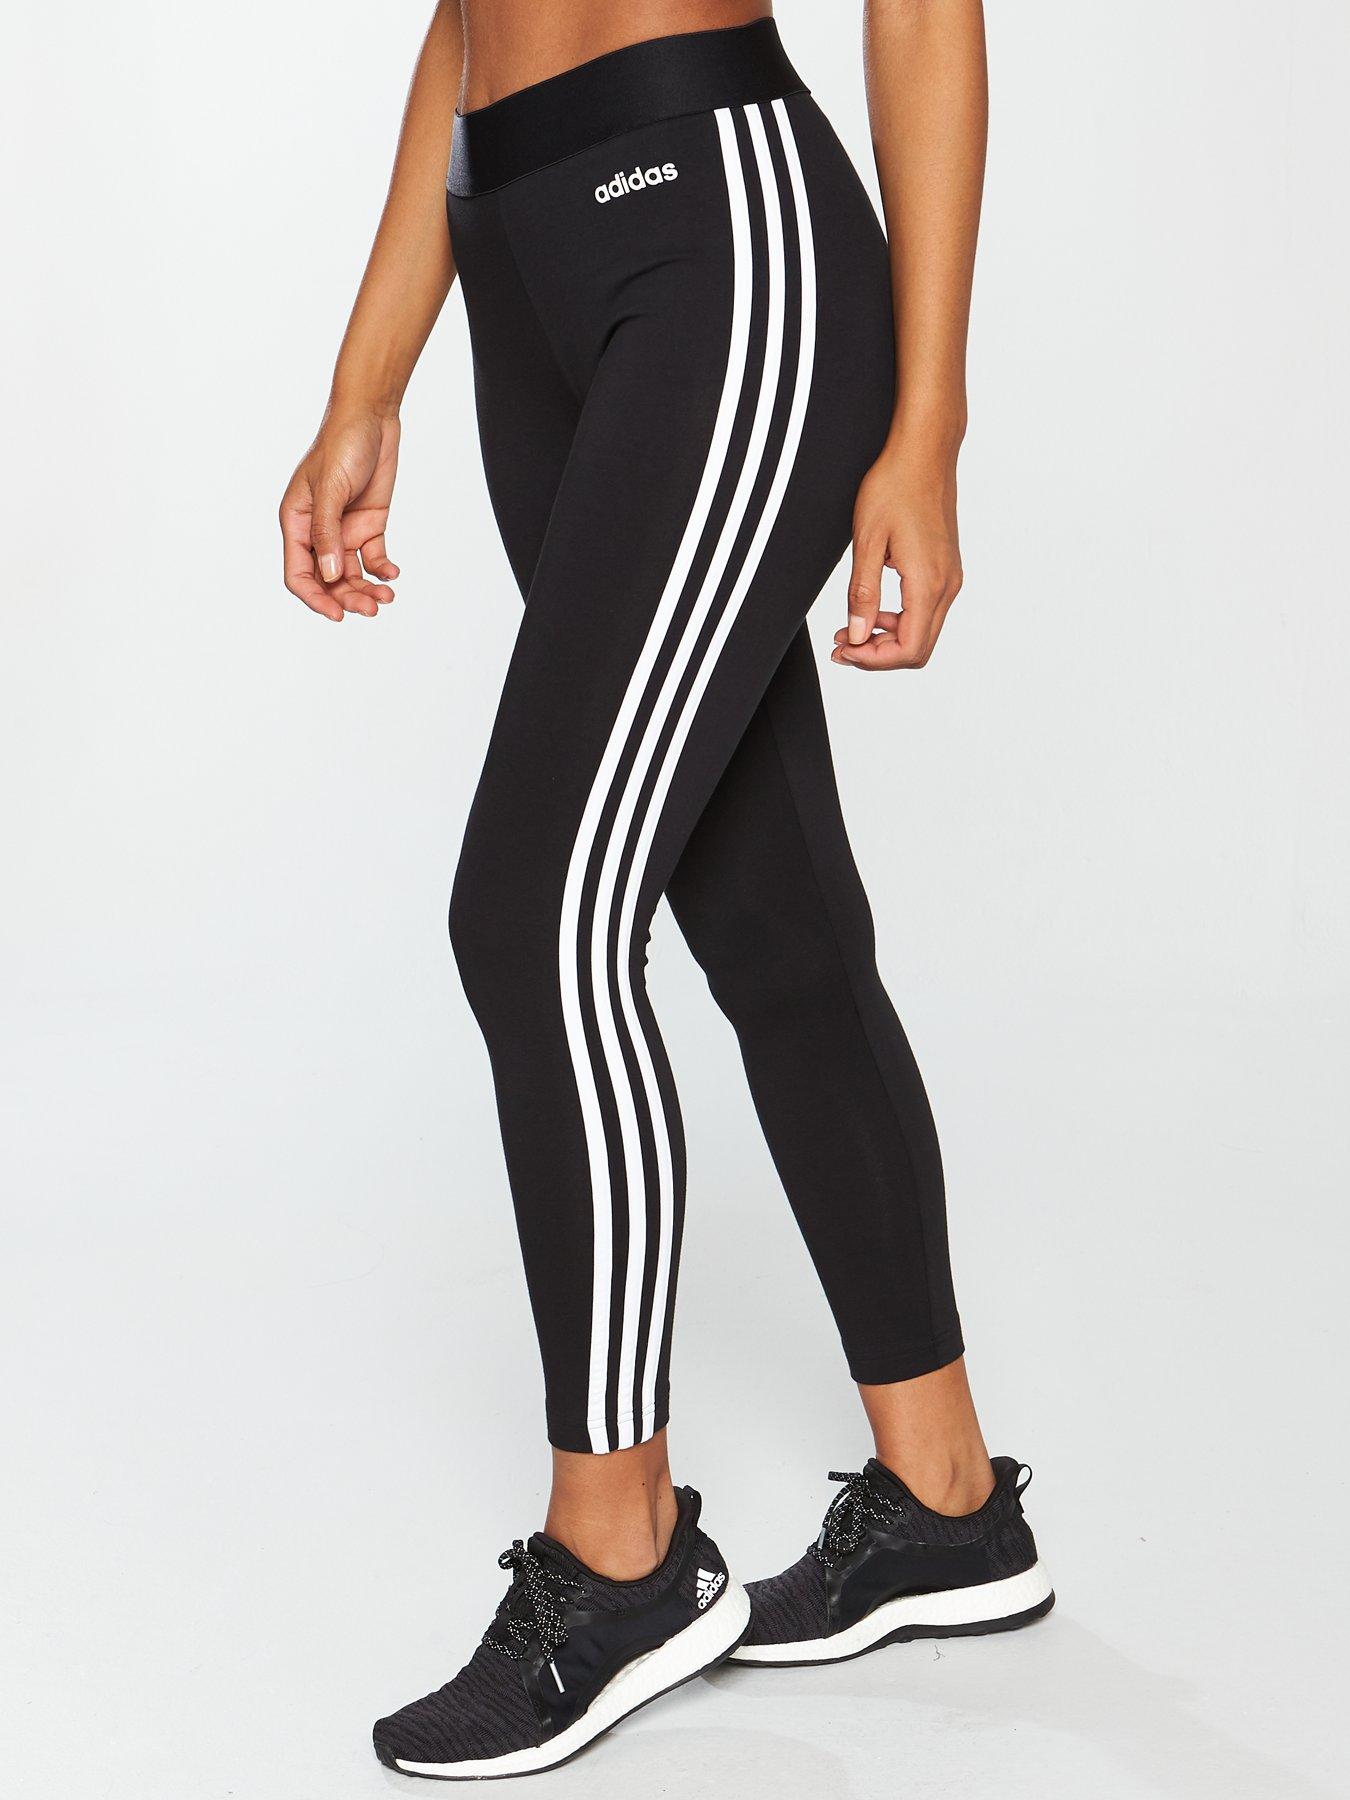 adidas 3 stripes tight leggings